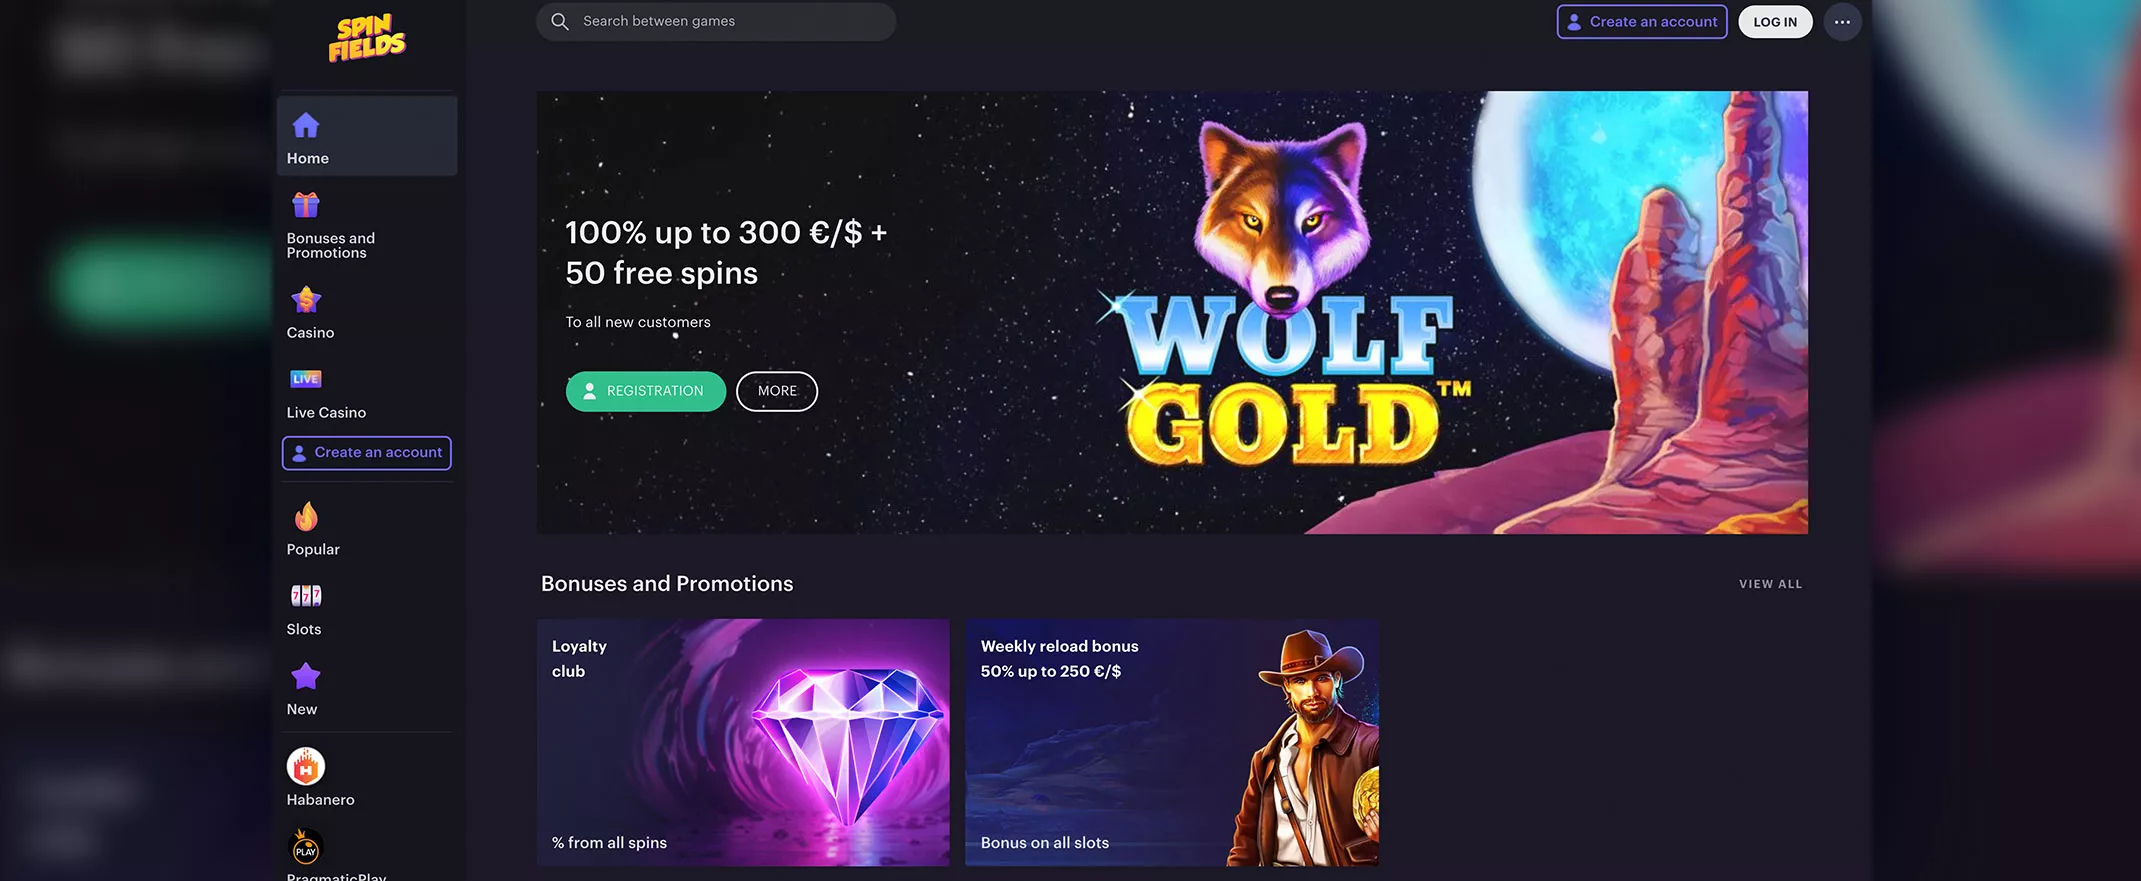 Spinfields Casino Review homepage screenshot